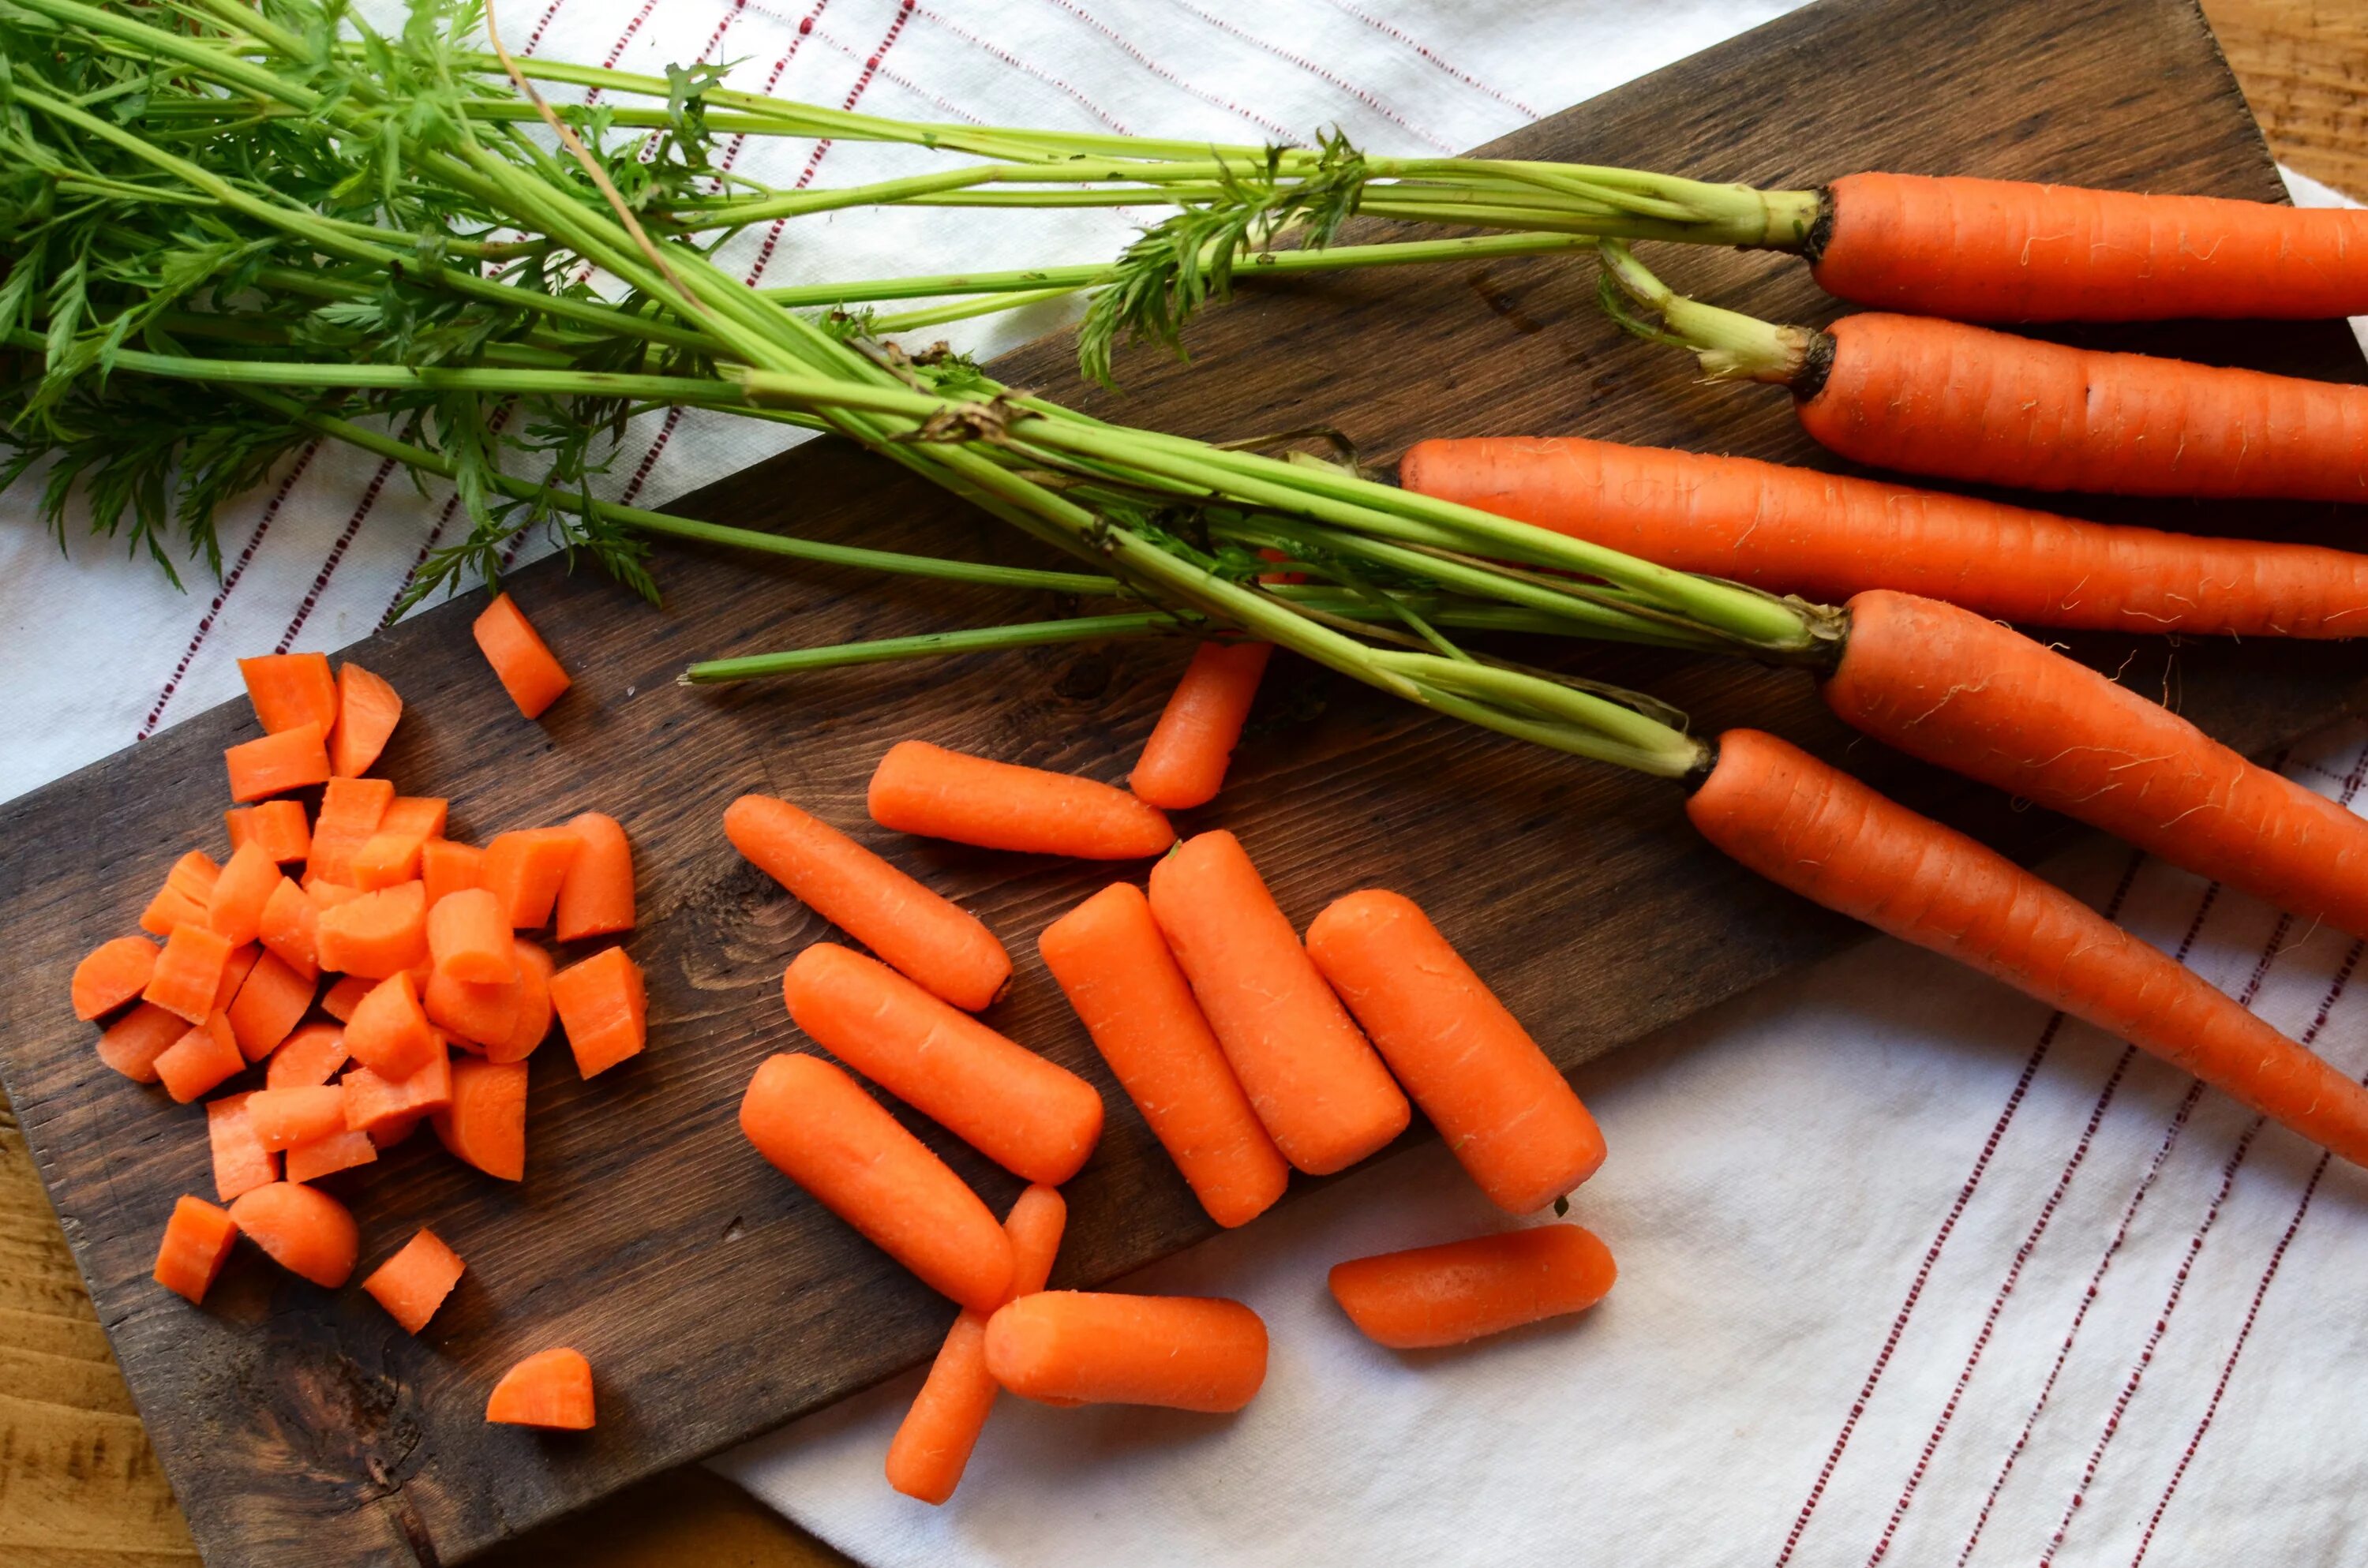 Carrot vegetable. Морковь. Красивая морковь. Овощи морковь. Сырая морковь.